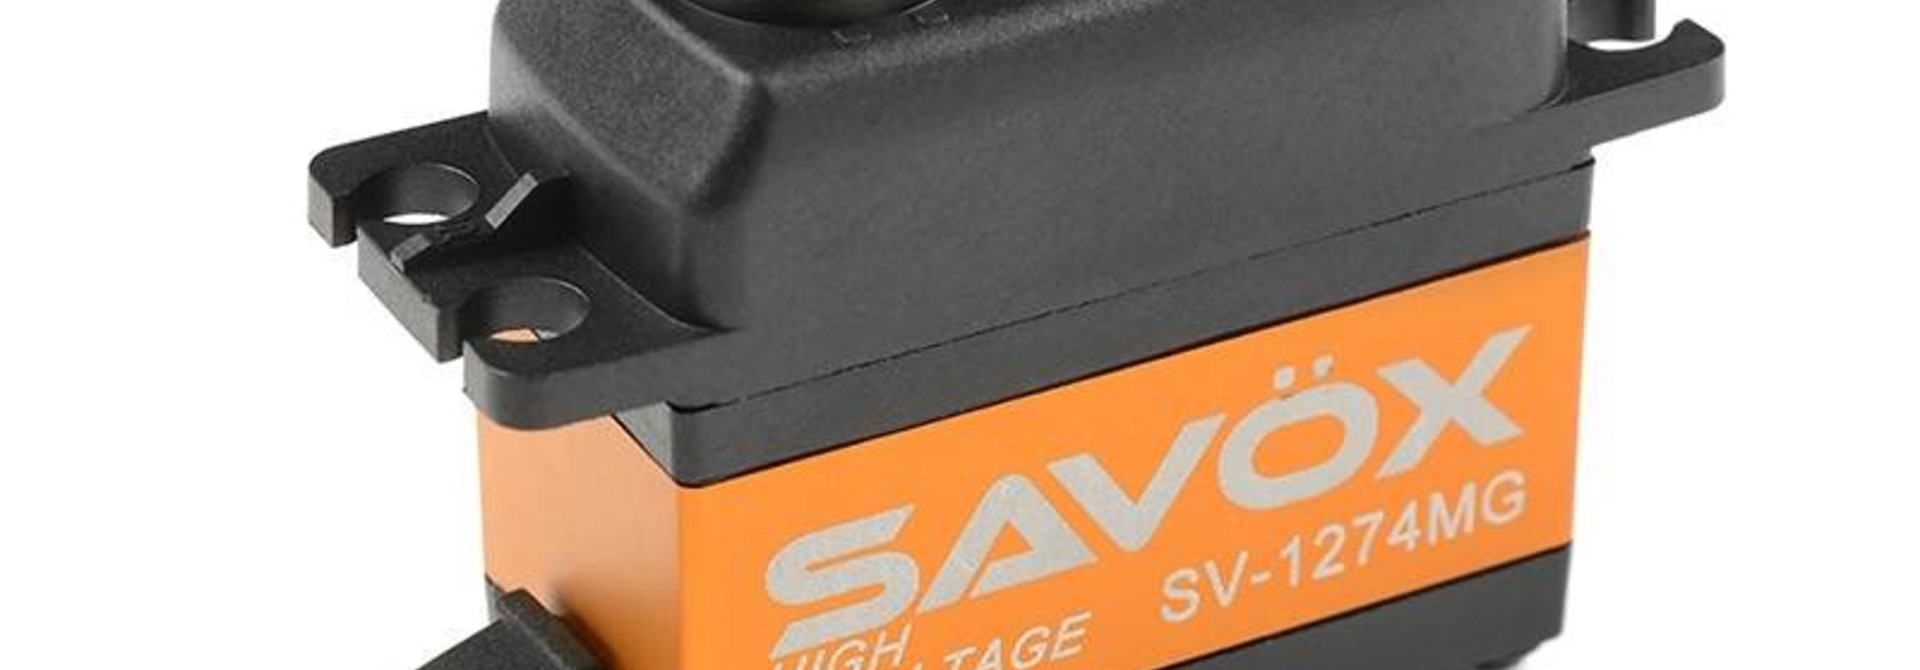 Savox - Servo - SV-1274MG - Digital - High Voltage - Coreless Motor - Metaal tandwielen